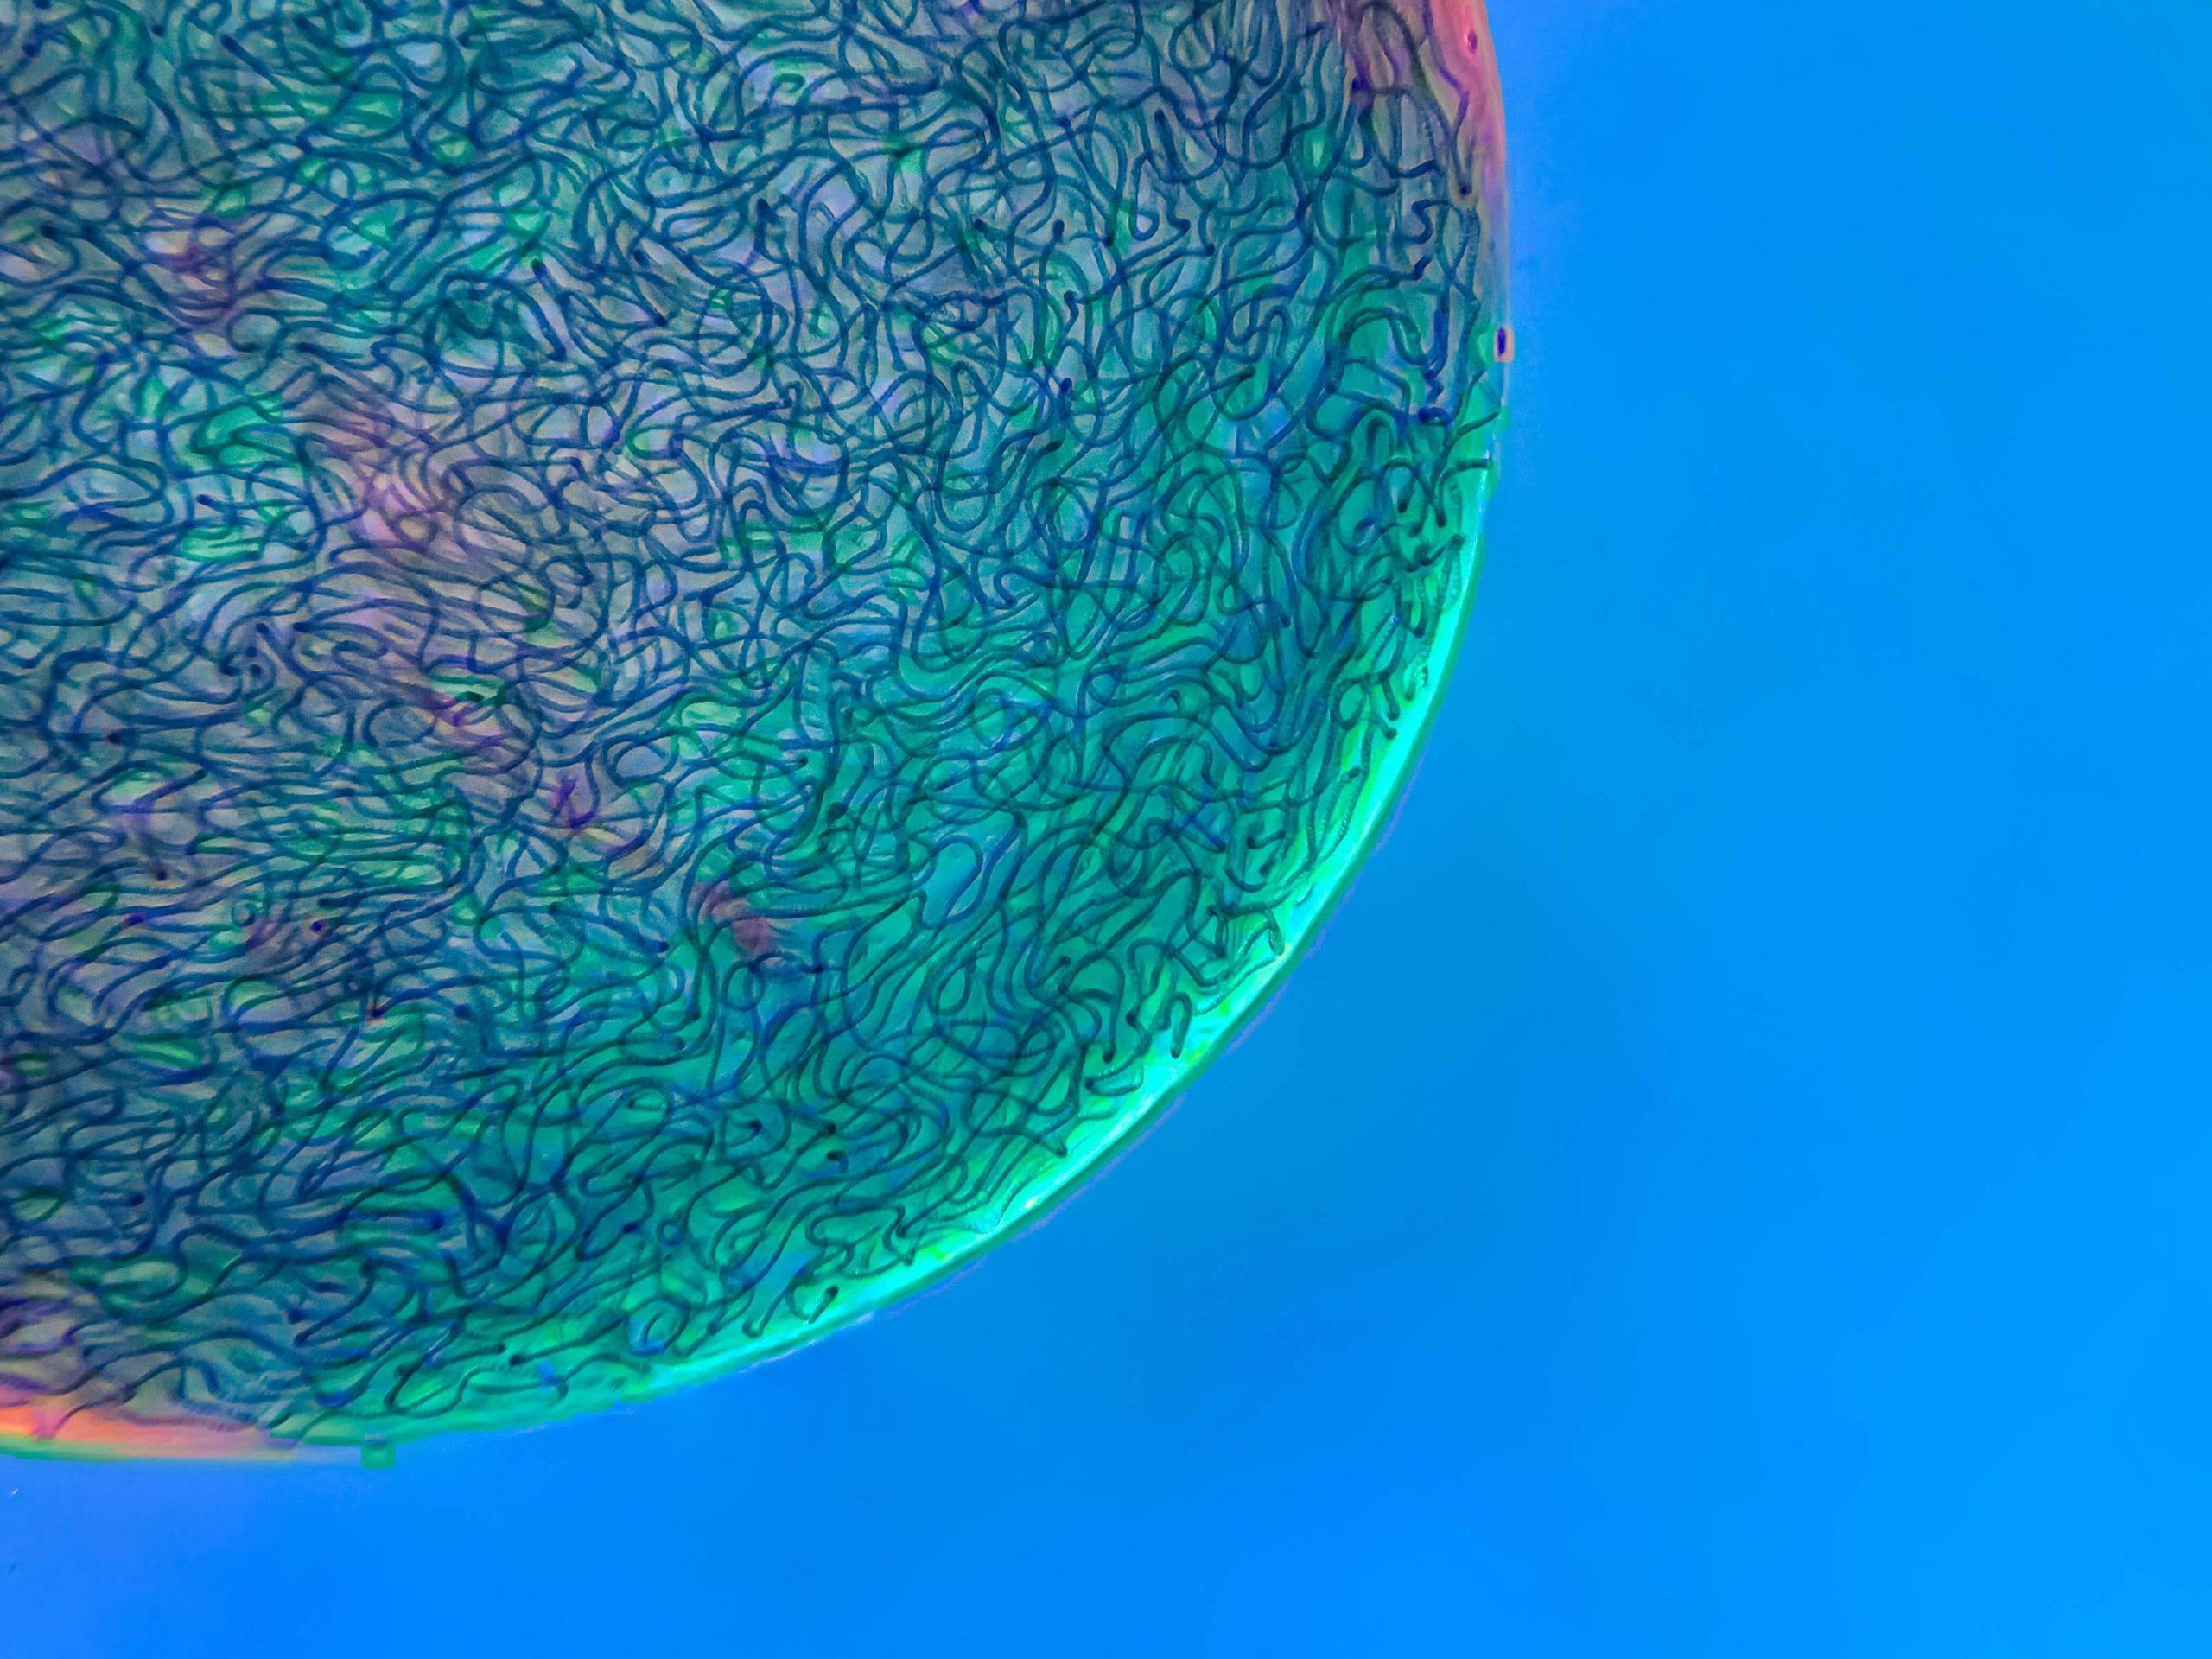 Strands of Nostoc cyanobacteria. (Image: Martin Kaae Kristiansen)